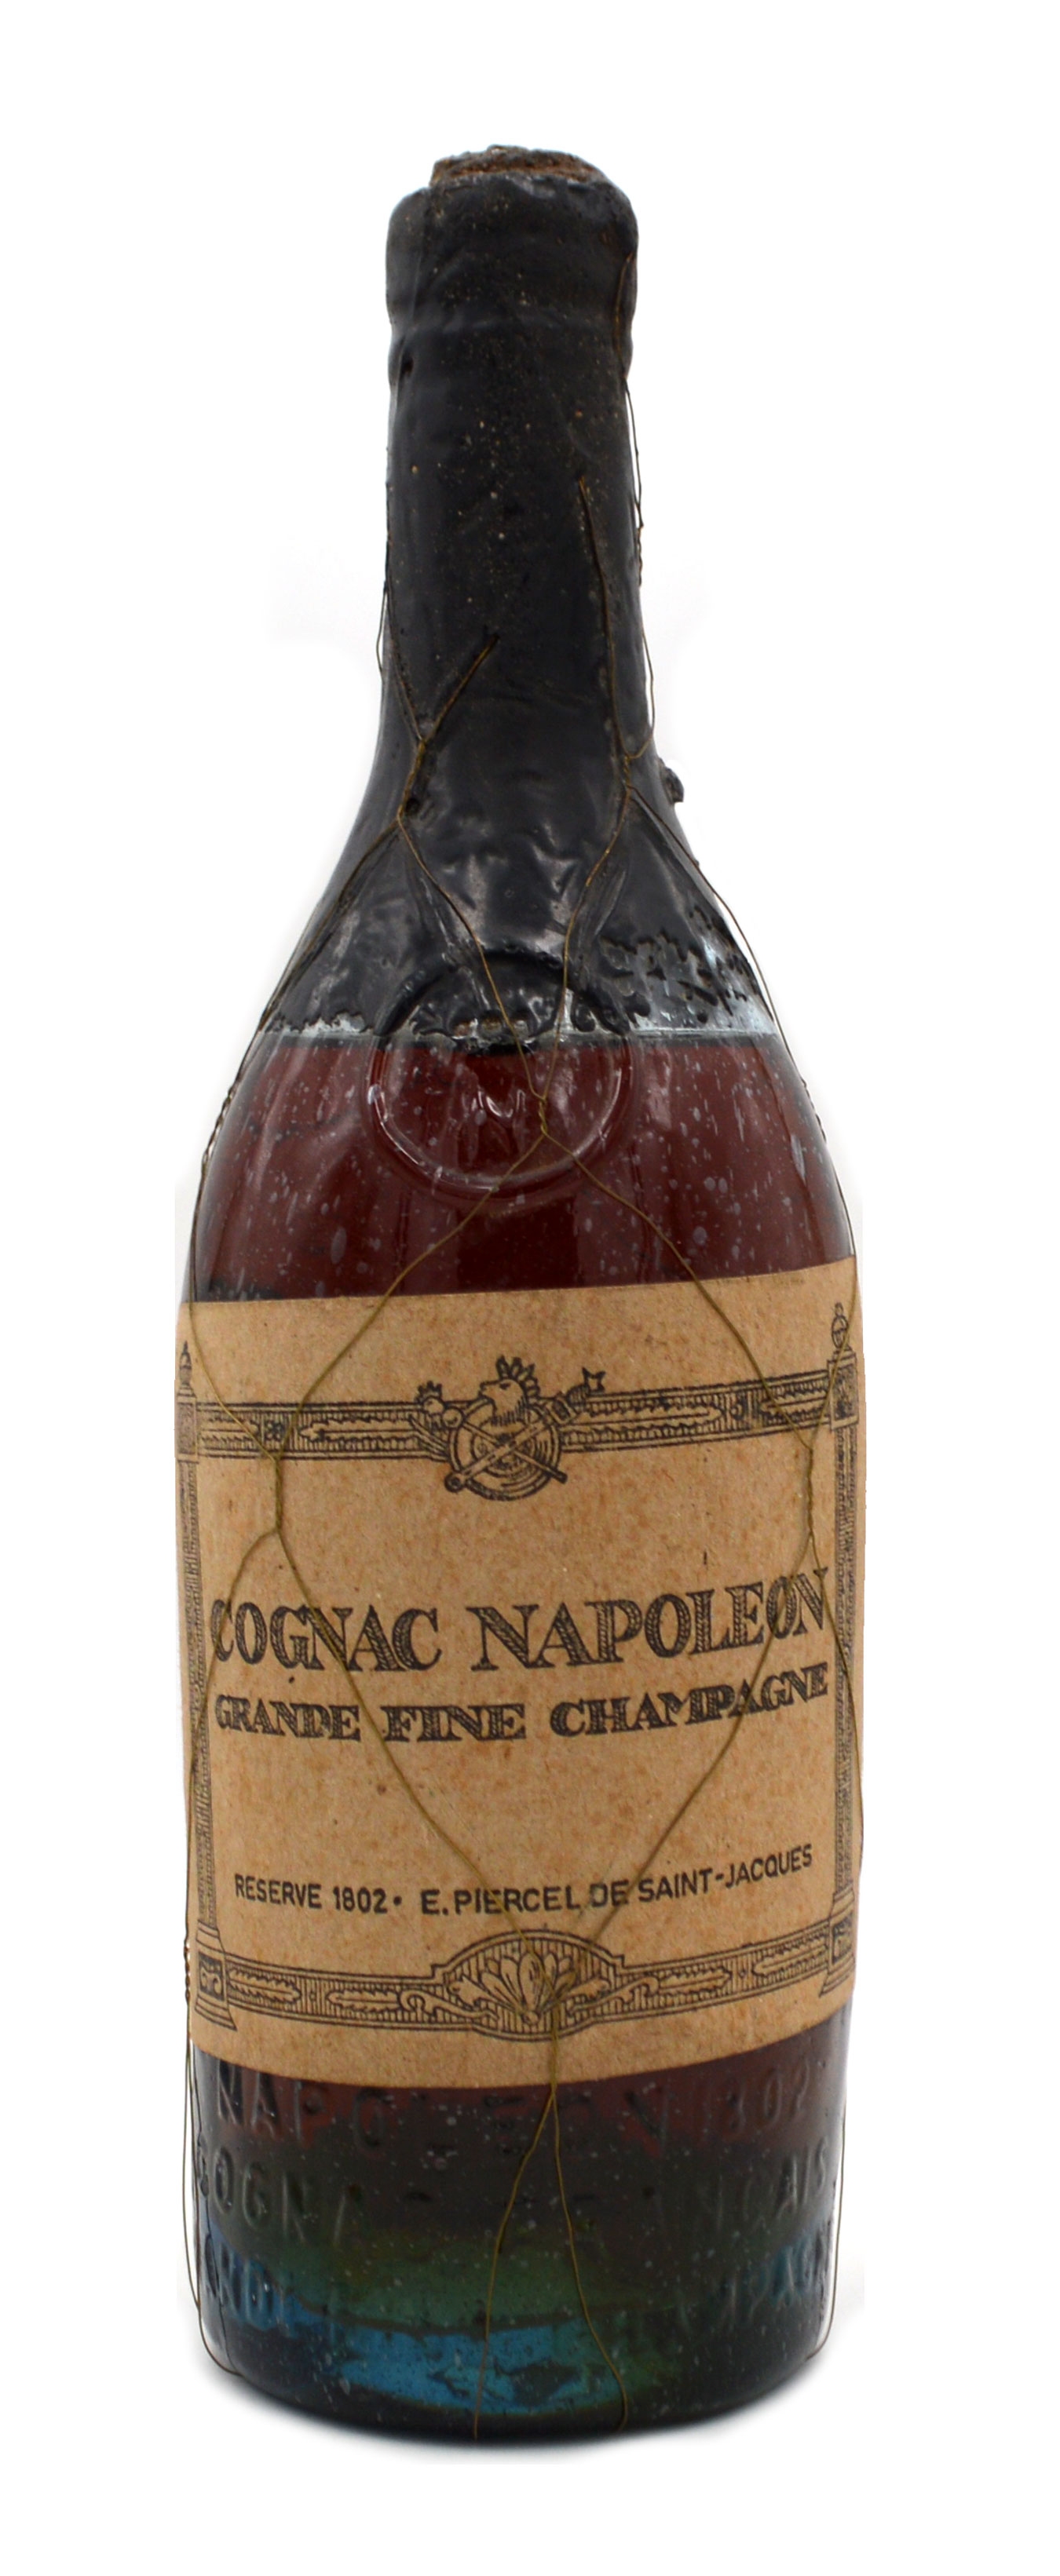 Cognac Napoleon 1802 Grande Fine Champagne | worldwidespirits